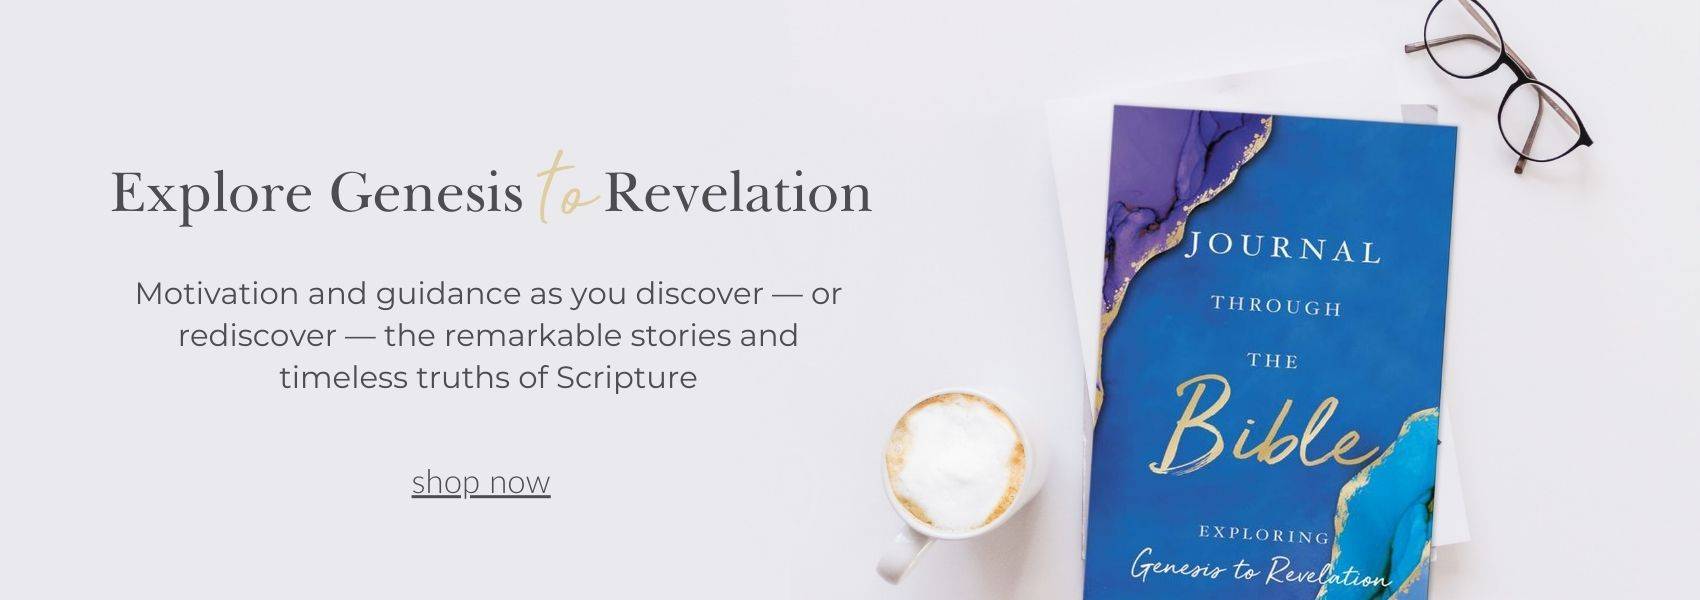 Journal Through the Bible - Explore Genesis to Revelation